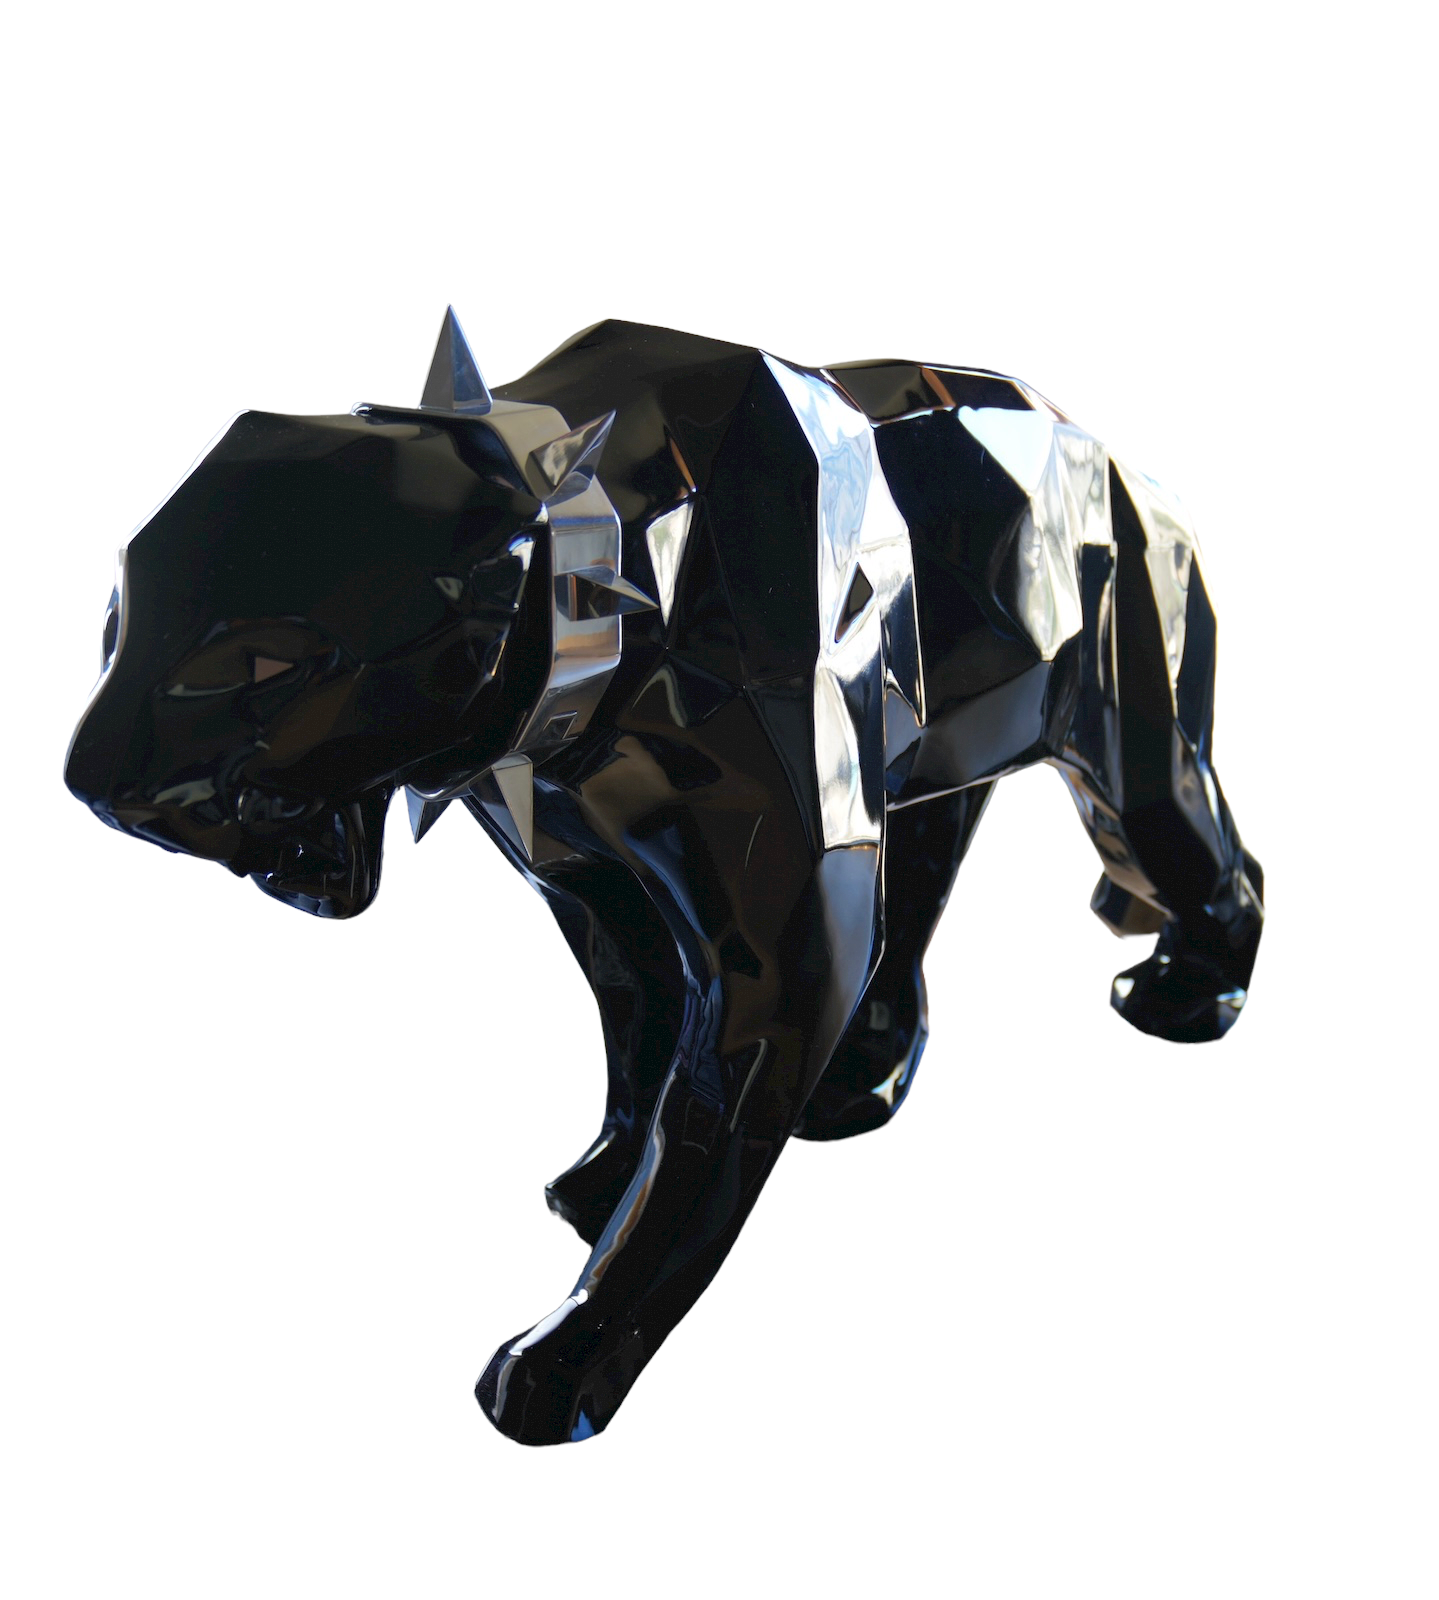 Panther Wild Neck avec yeux aluminium